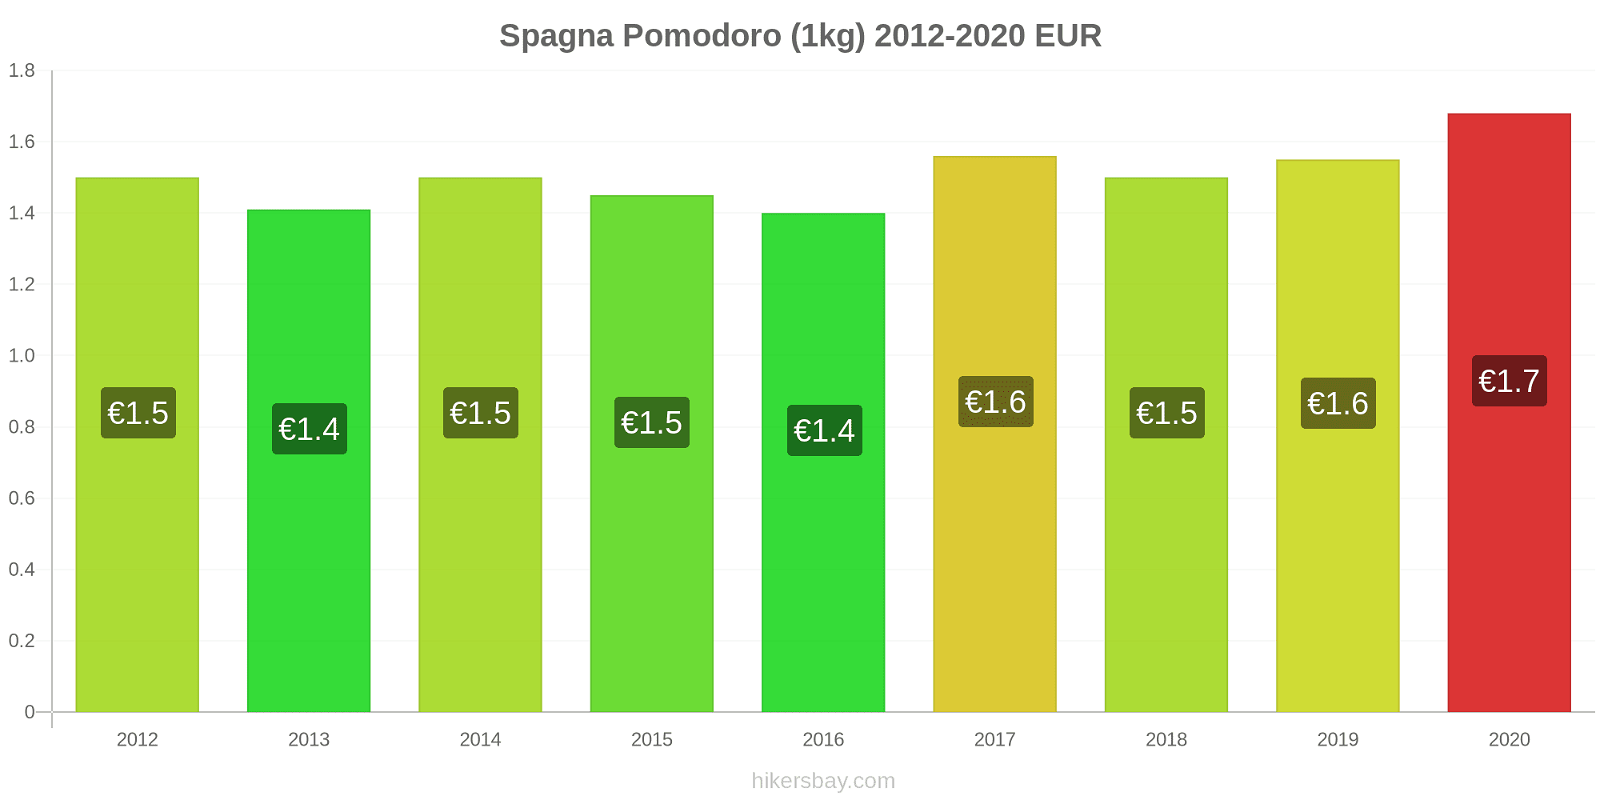 Spagna variazioni di prezzo Pomodoro (1kg) hikersbay.com